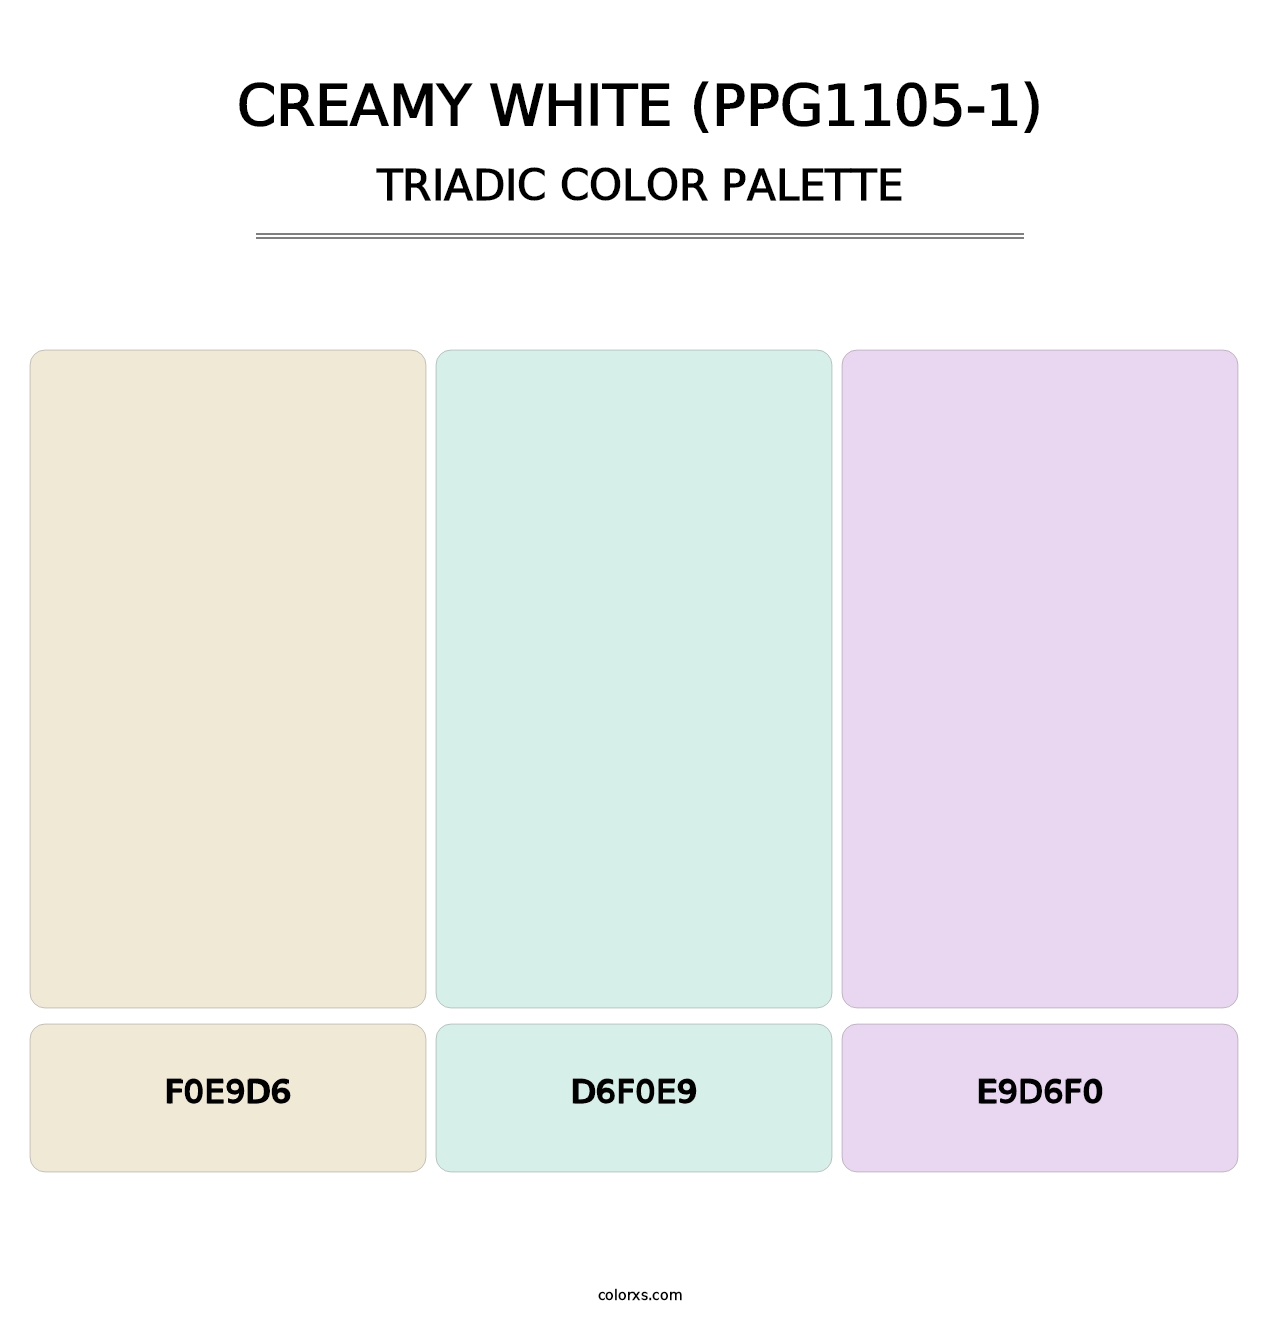 Creamy White (PPG1105-1) - Triadic Color Palette